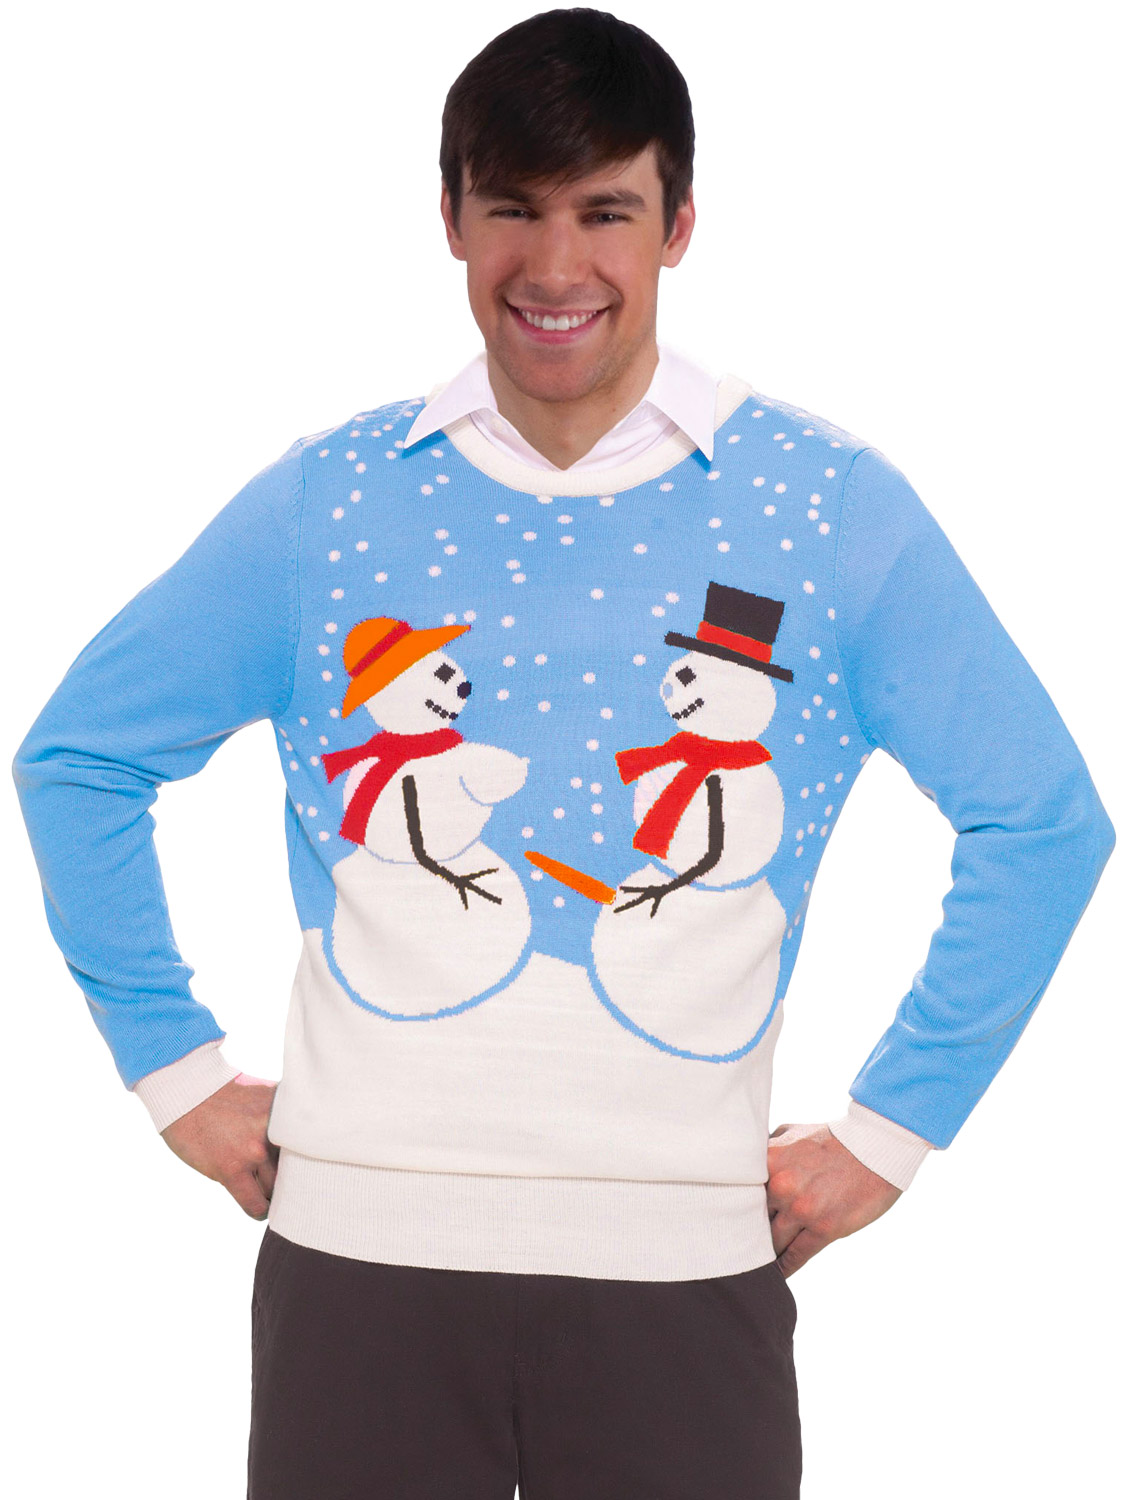 Mens Rude Christmas Jumper Funny Novelty Christmas Party Fancy Dress Costume Ebay